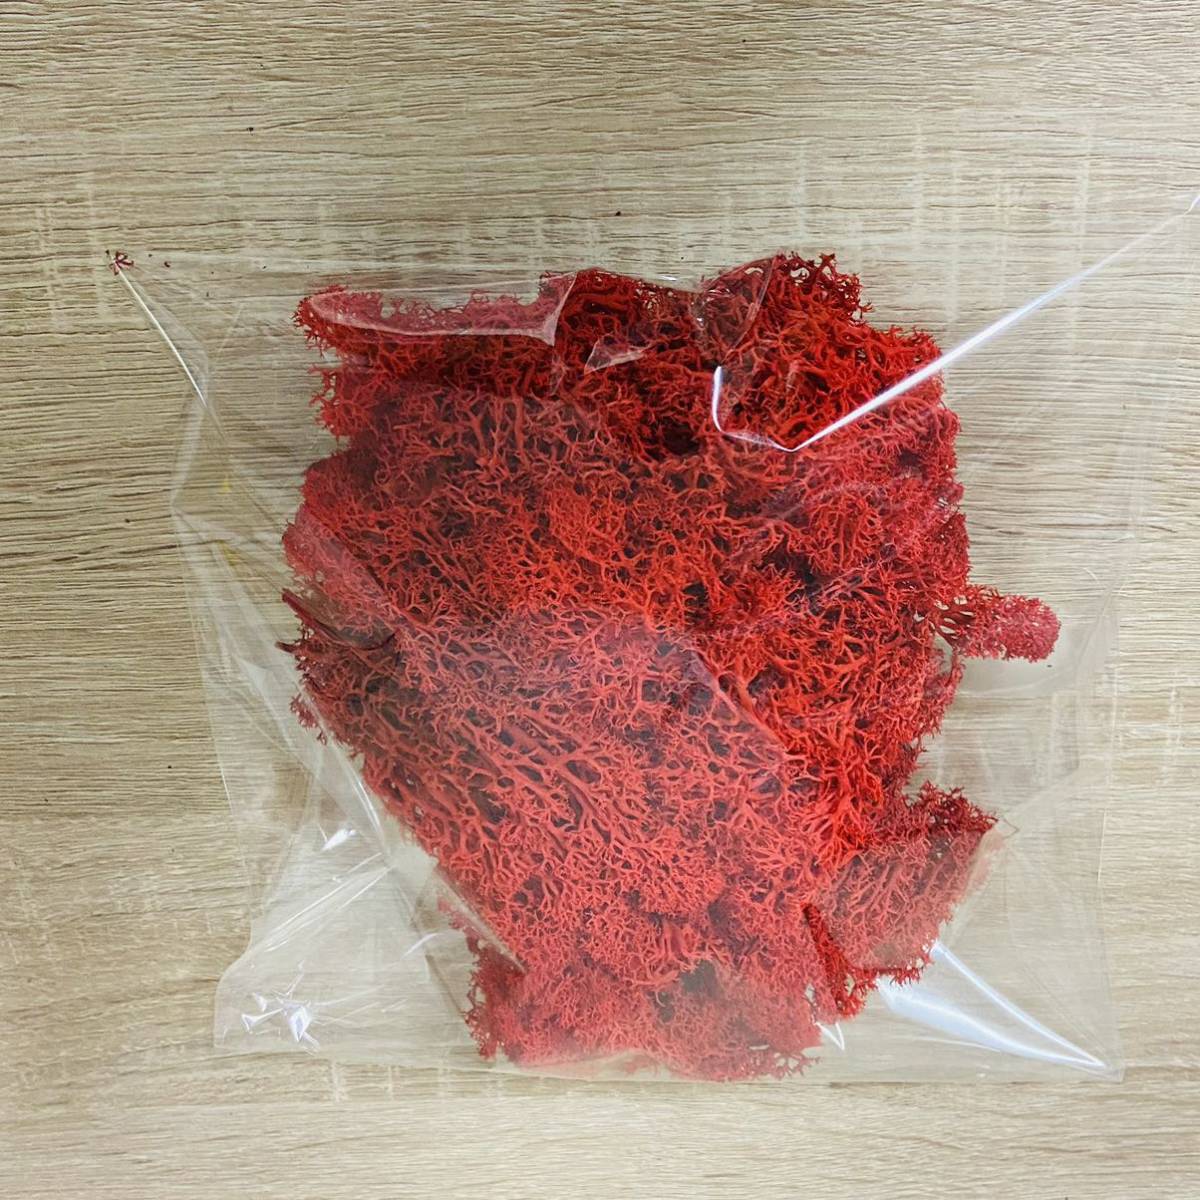  ska ntia Moss SCANDIAMOSS красный 50g дисплей мох Moss натуральный материалы красный дезодорирующий эффект 